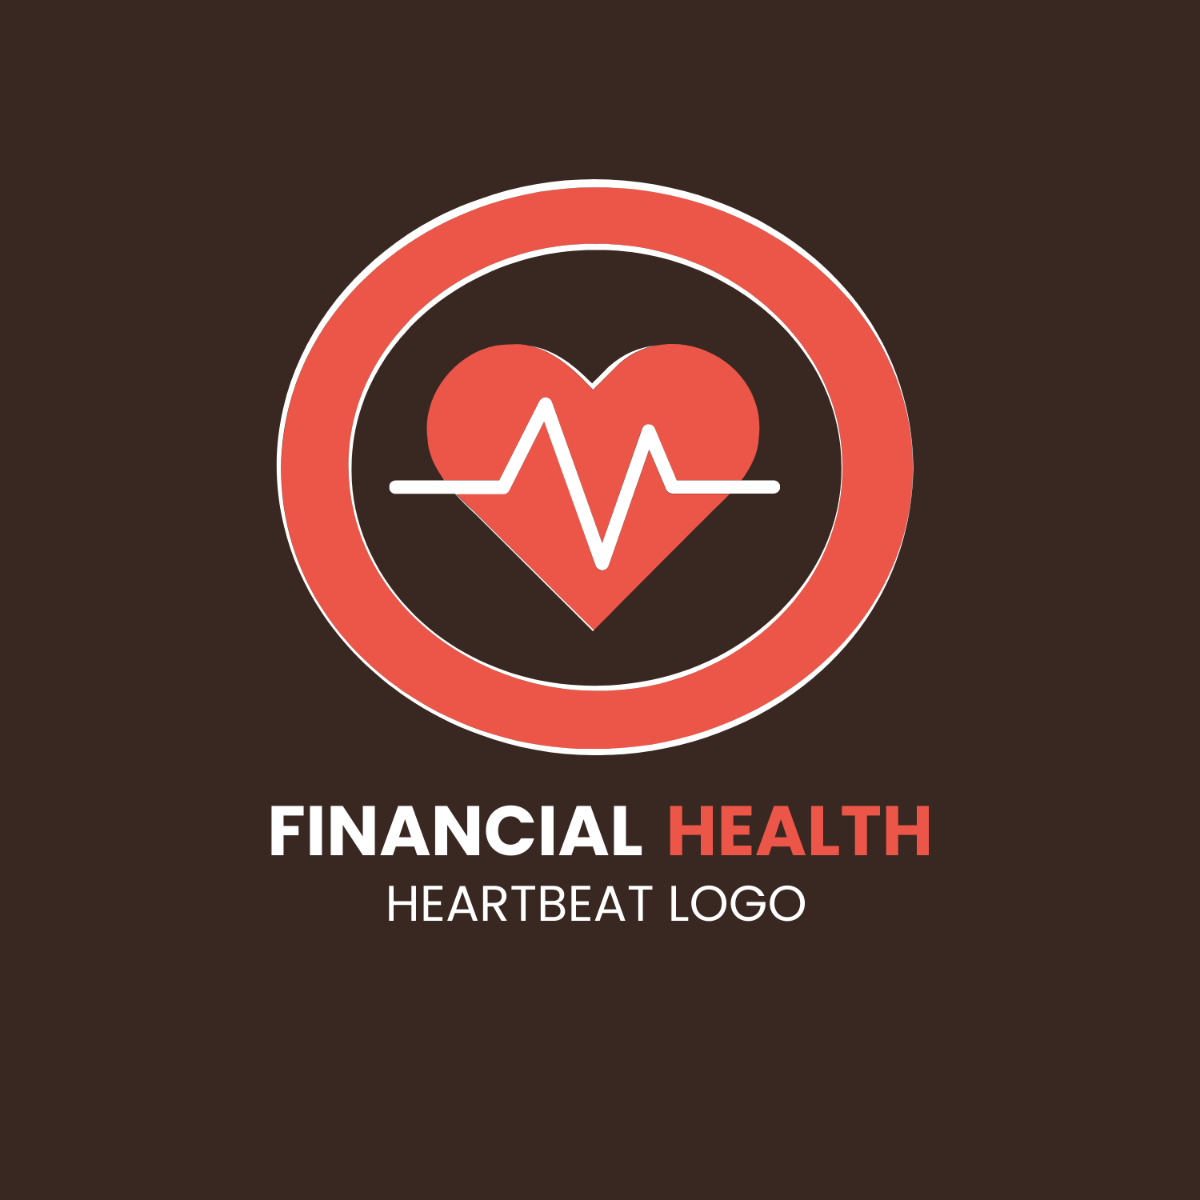 Financial Health Heartbeat Logo